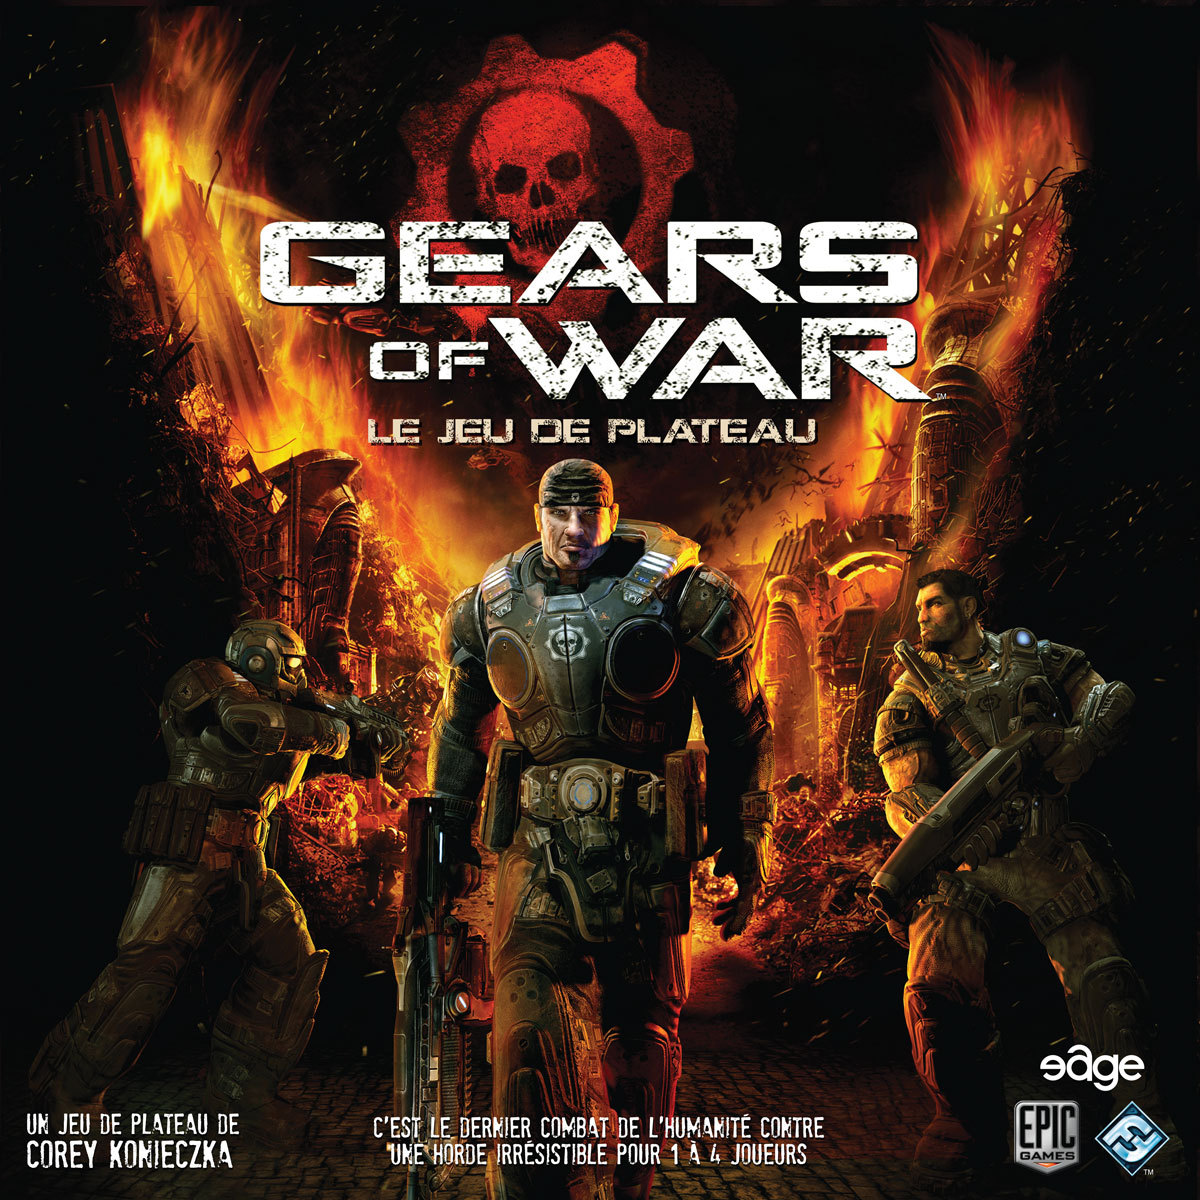 http://image.jeuxvideo.com/imd/g/gears_of_war_cover_fr-2.jpg